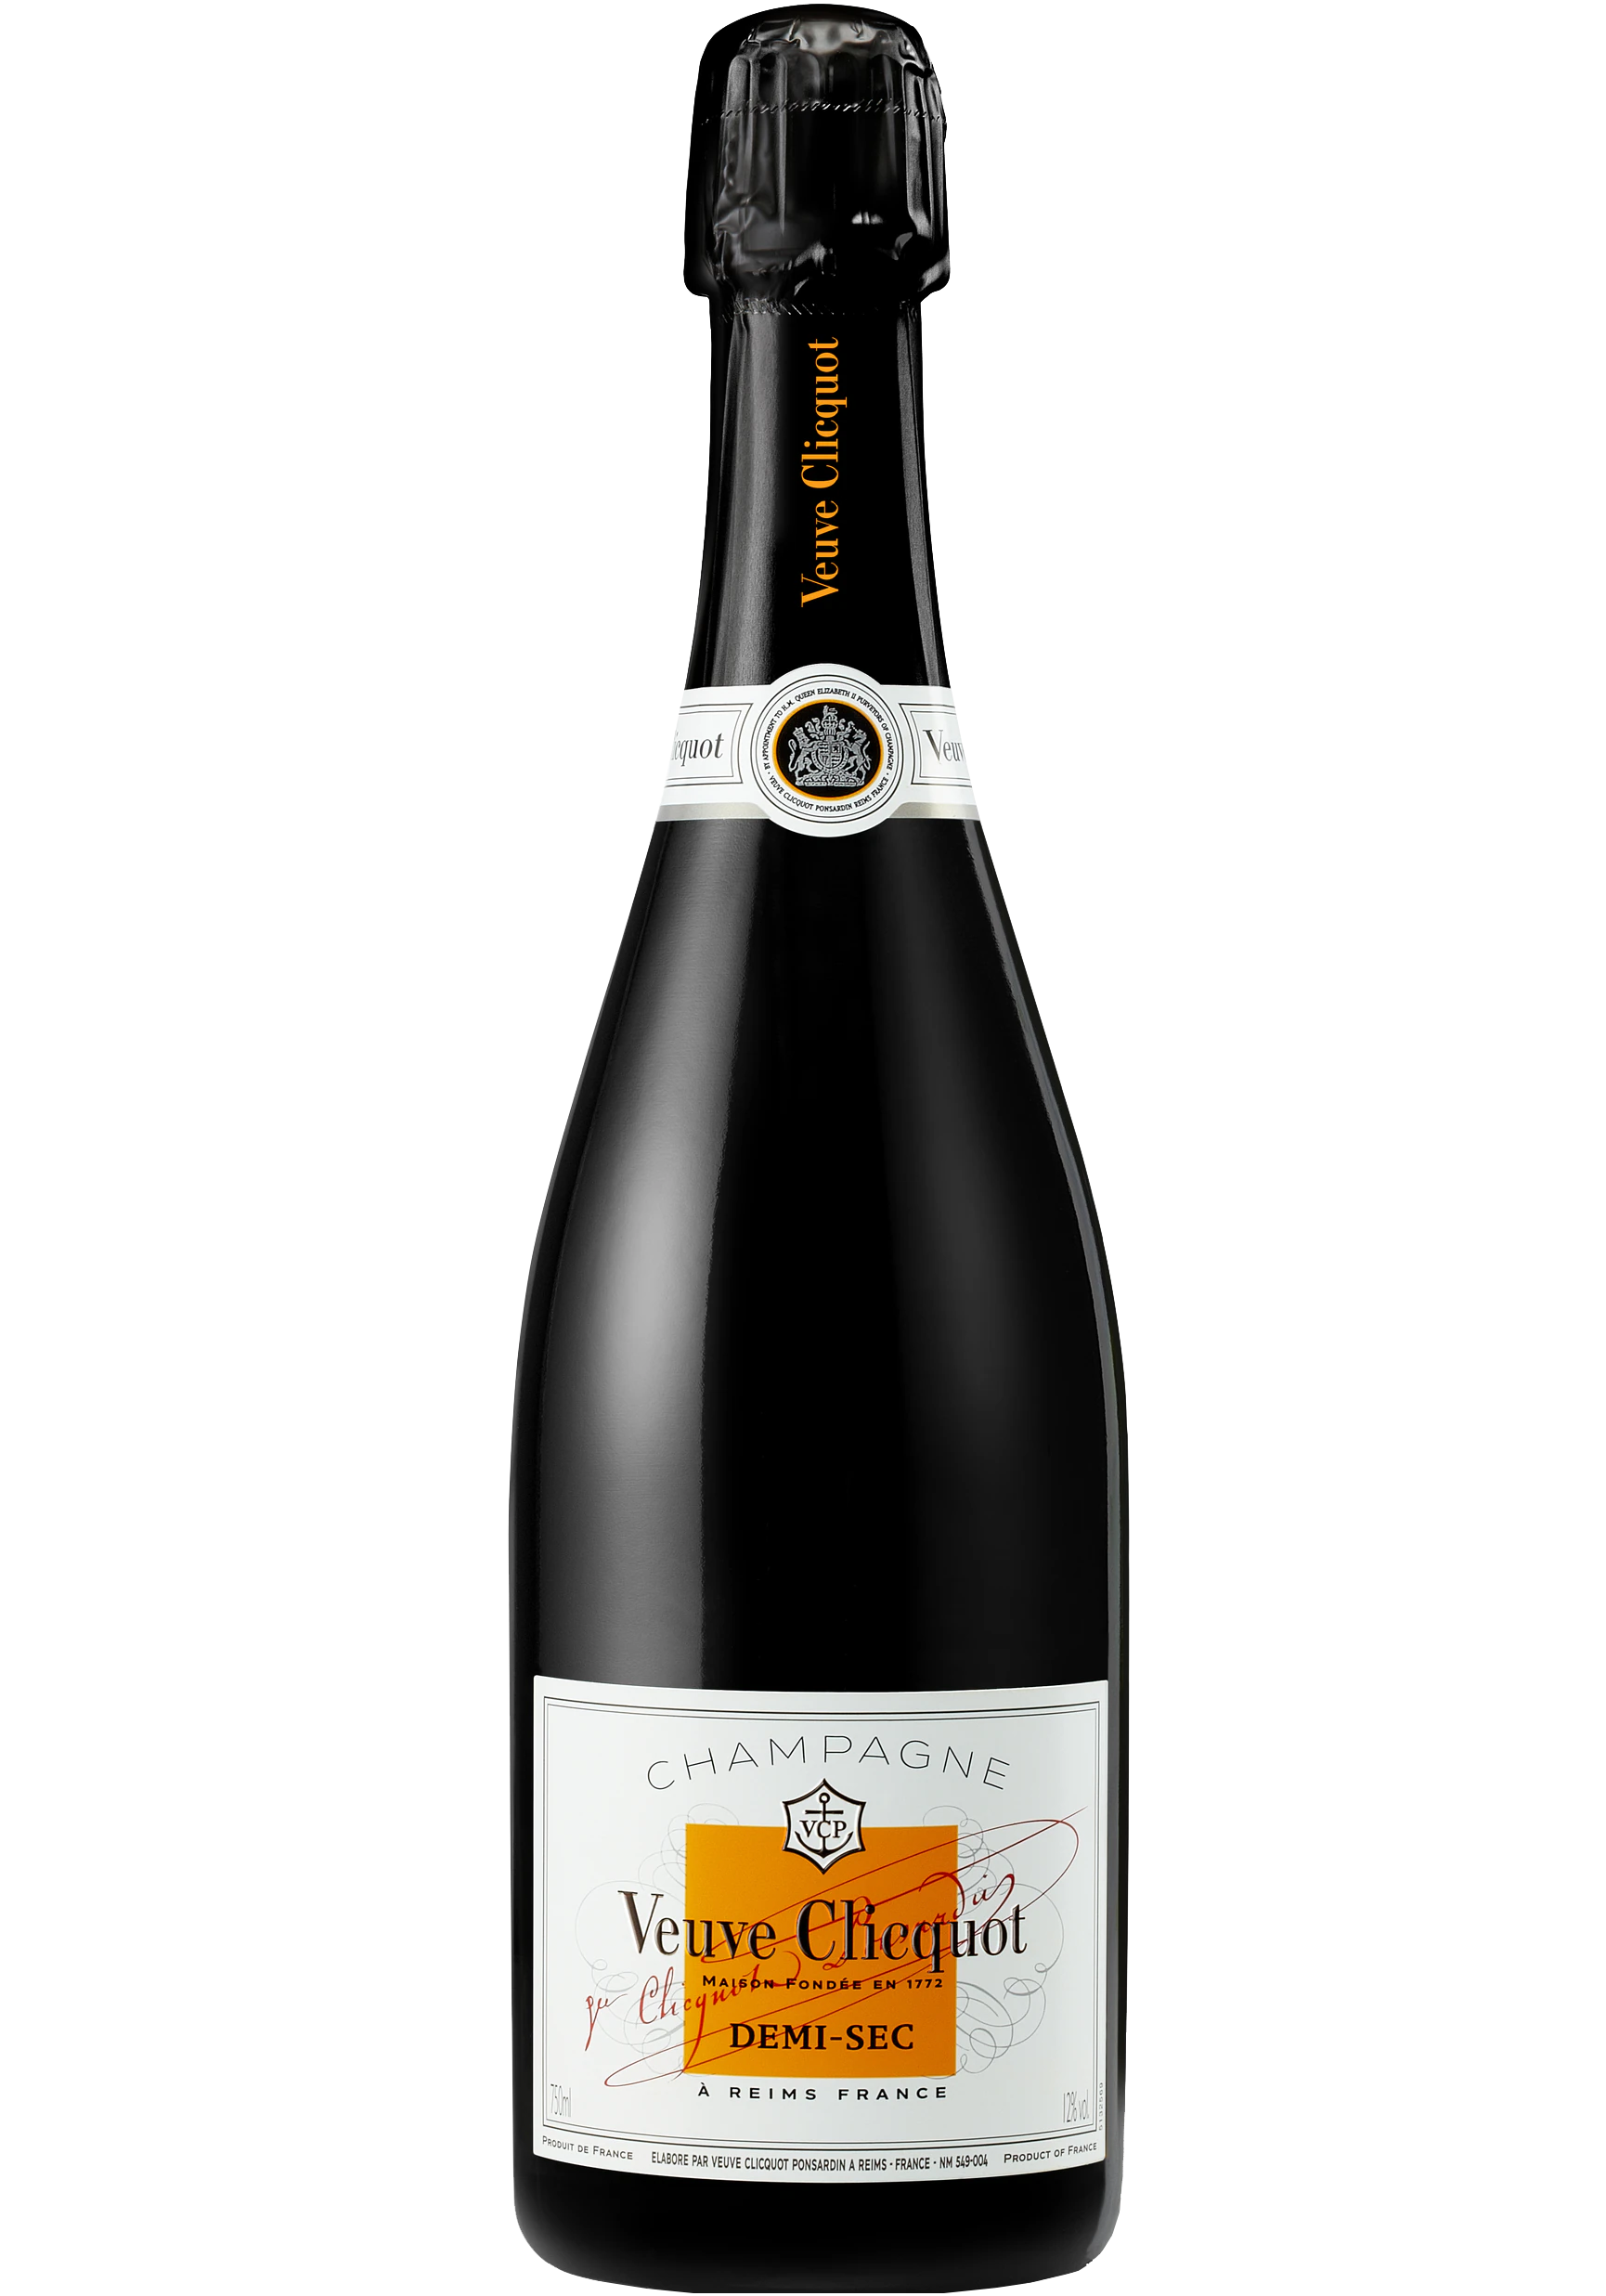 Veuve Clicquot Demi-sec Champagne